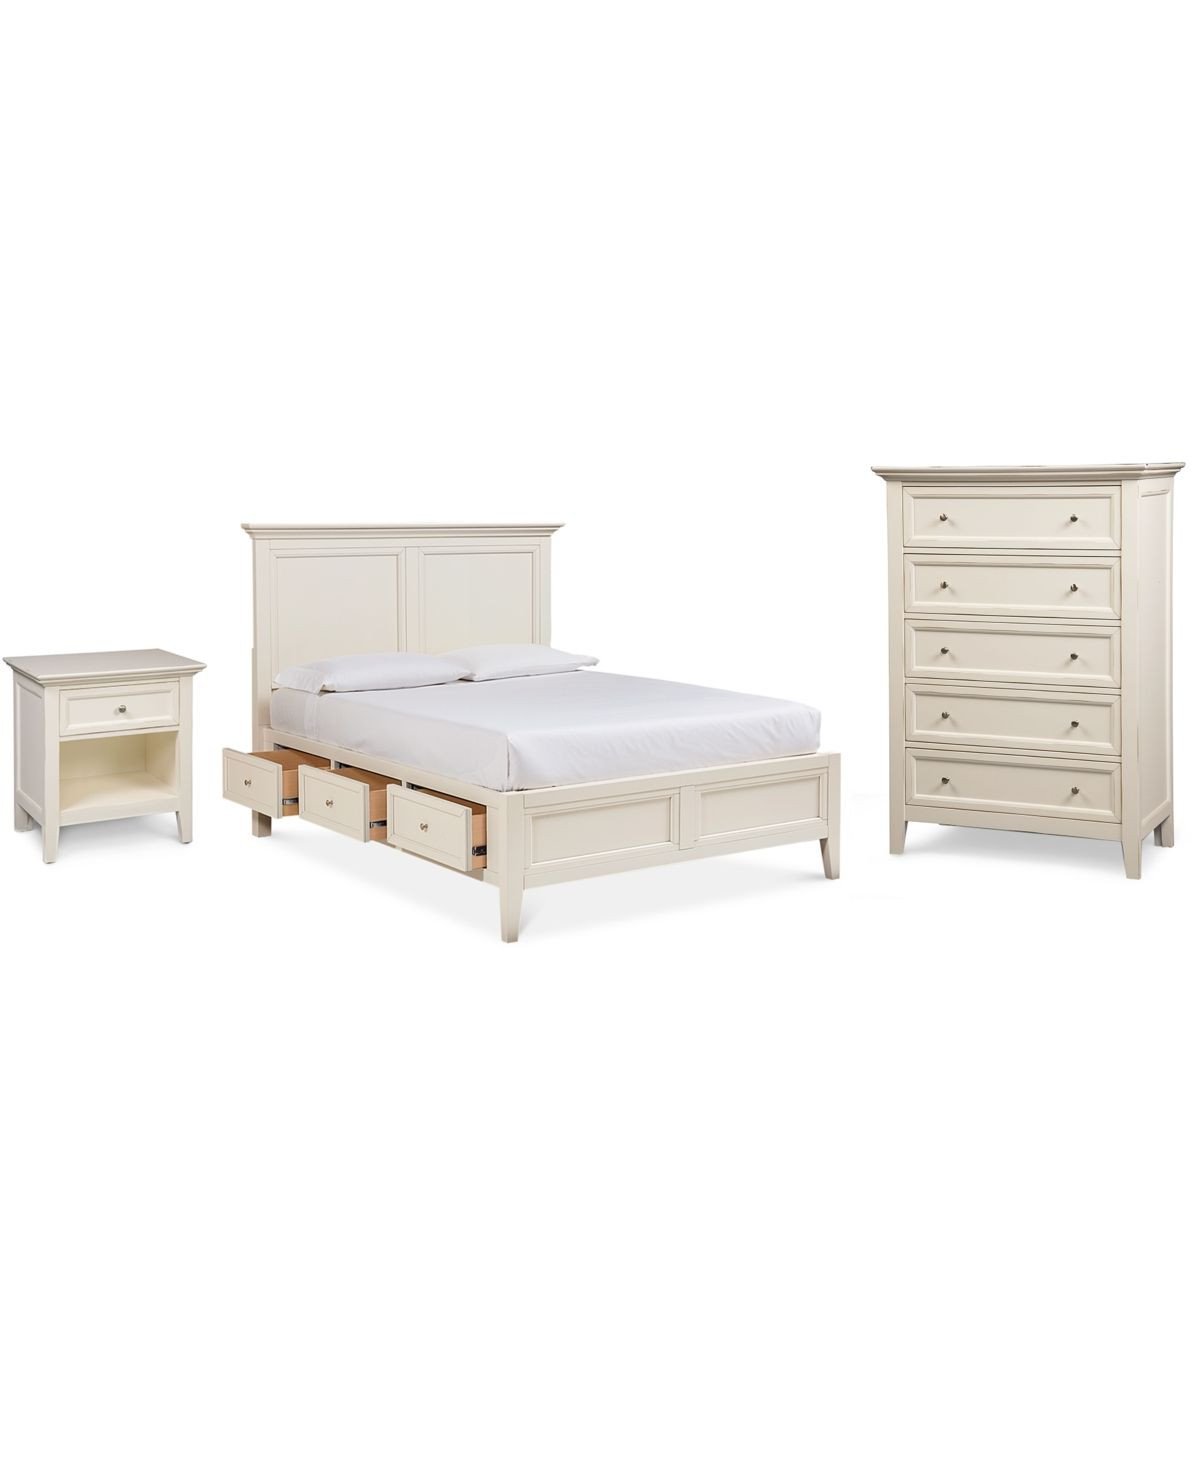 Complete Bedroom Furniture Set Best Of Sanibel Storage Bedroom Furniture 3 Pc Set Queen Bed